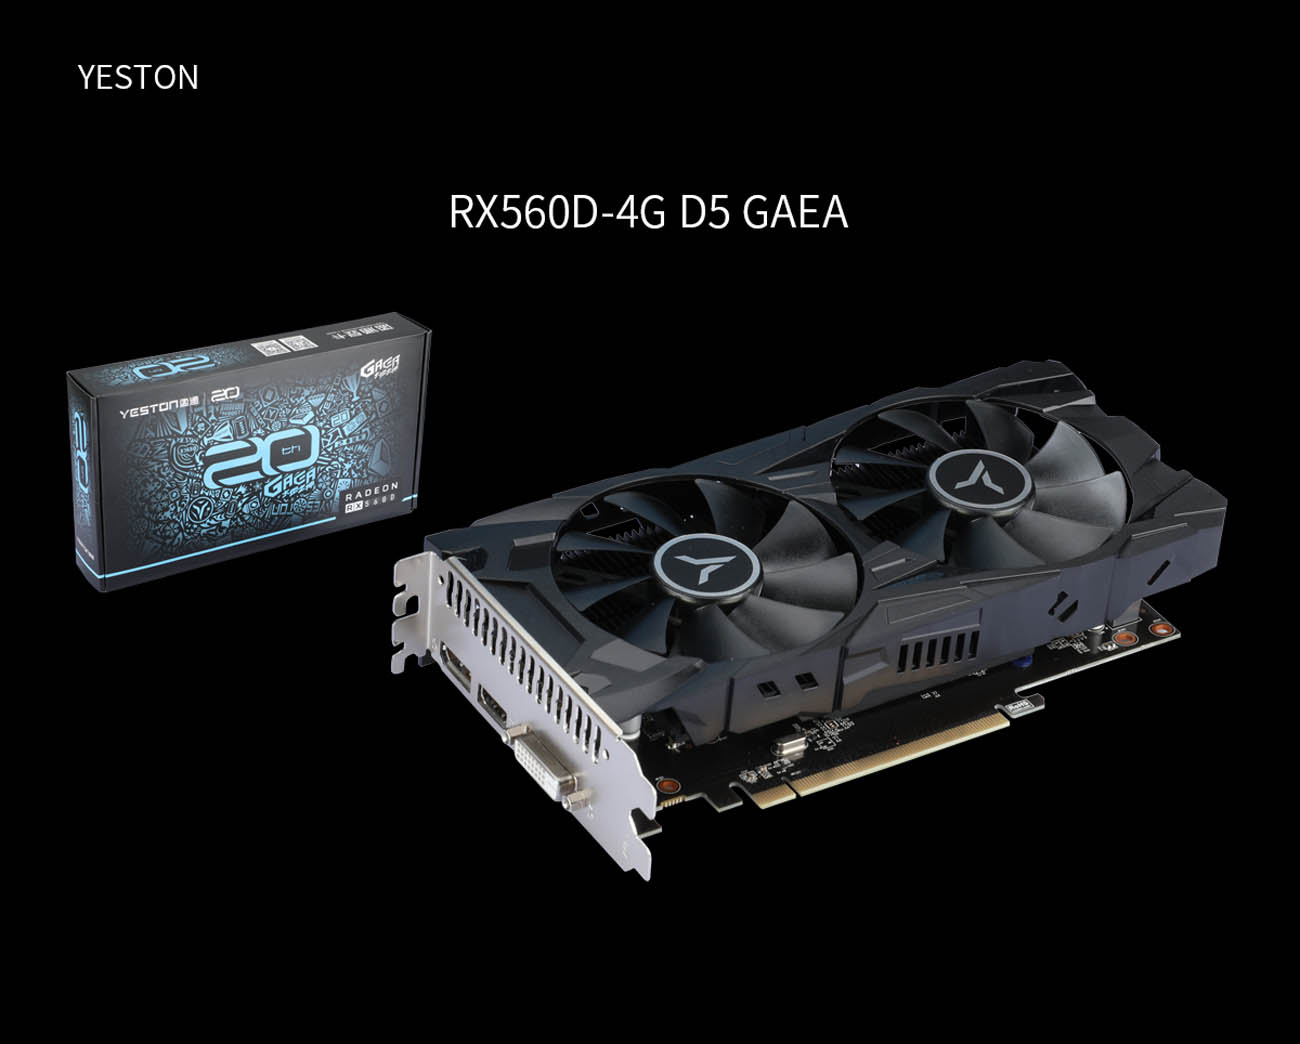 Yeston AMD Radeon RX 560 4G D5 Gaming Graphics Card Video Card GPU GA Fan  Edition, 4G/128bit/GDDR5 PCI-Express 3.0x8 DirectX 12,DVI-D HDMI DP Desktop Graphics  Card (RX560D-4G D5) - Newegg.com